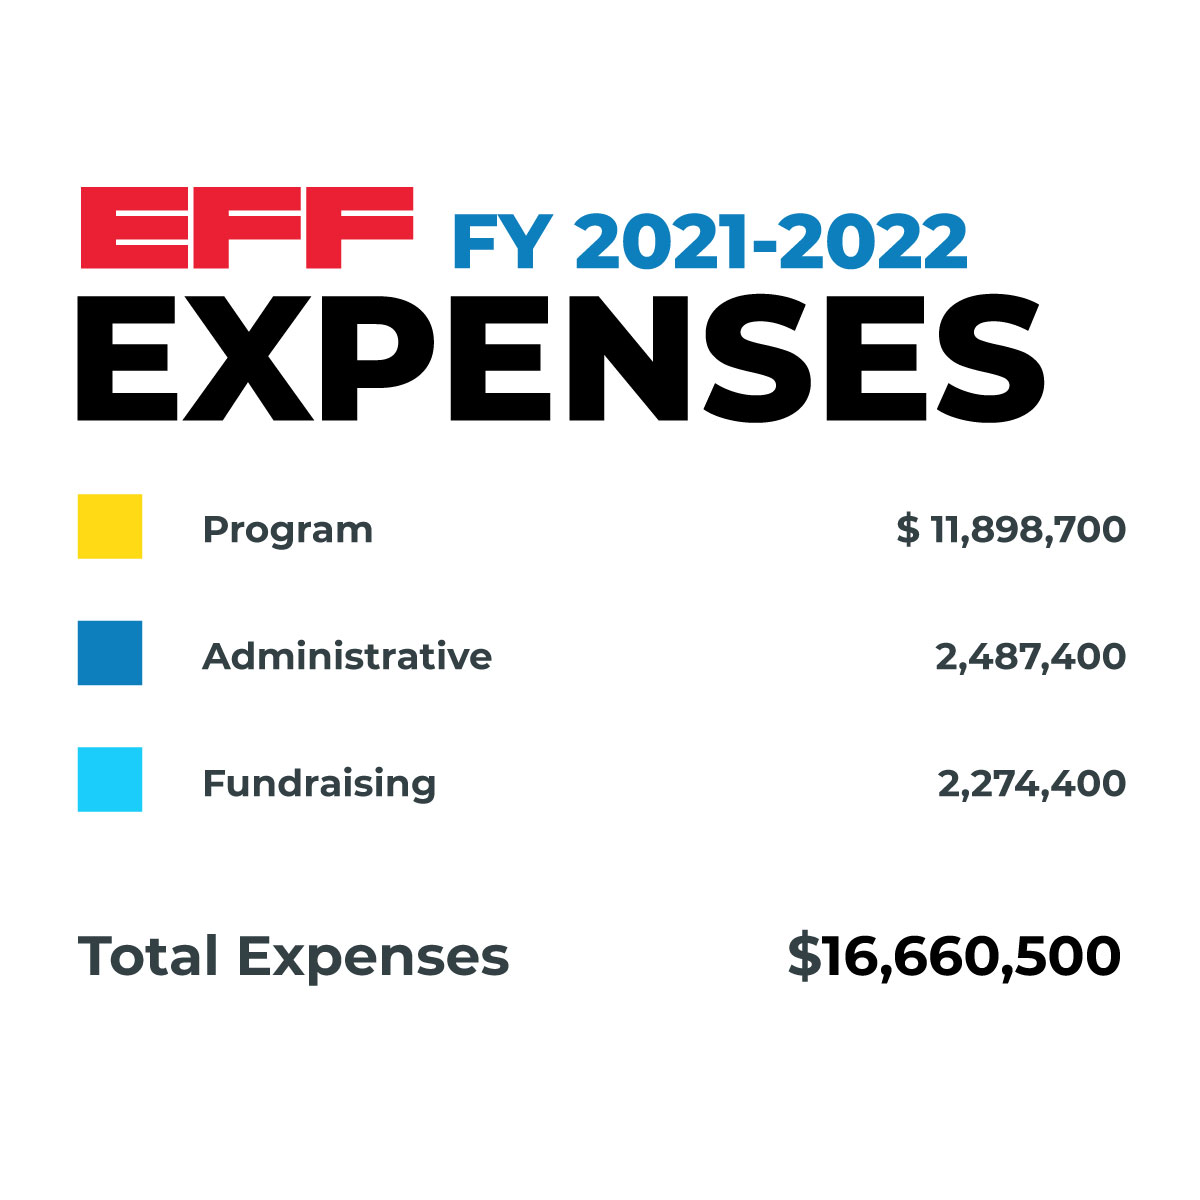 2021 Annual Report Expenses